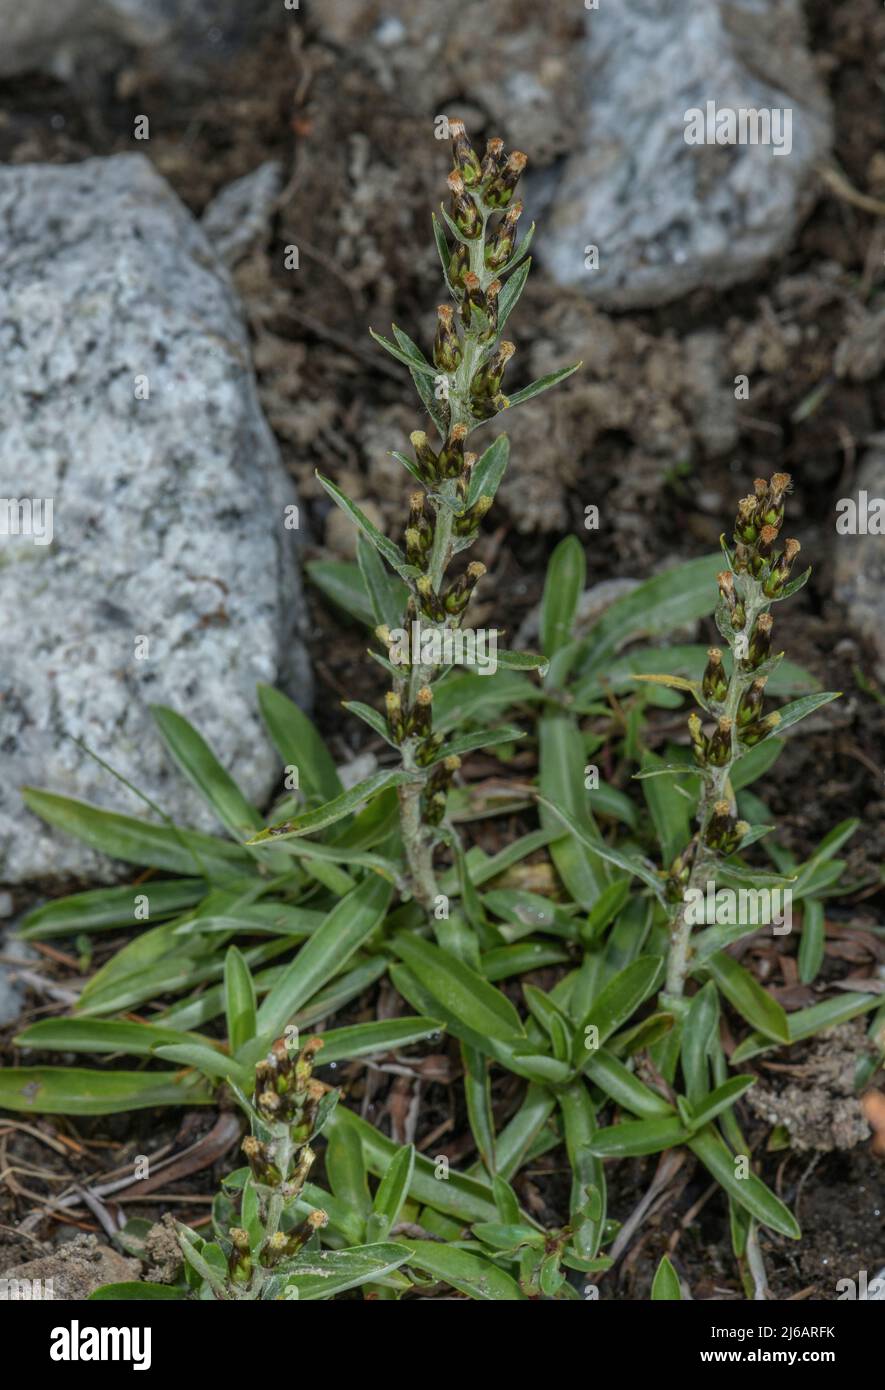 Heath cudweed, Gnaphalium sylvaticum, in flower on rocky slope. Stock Photo